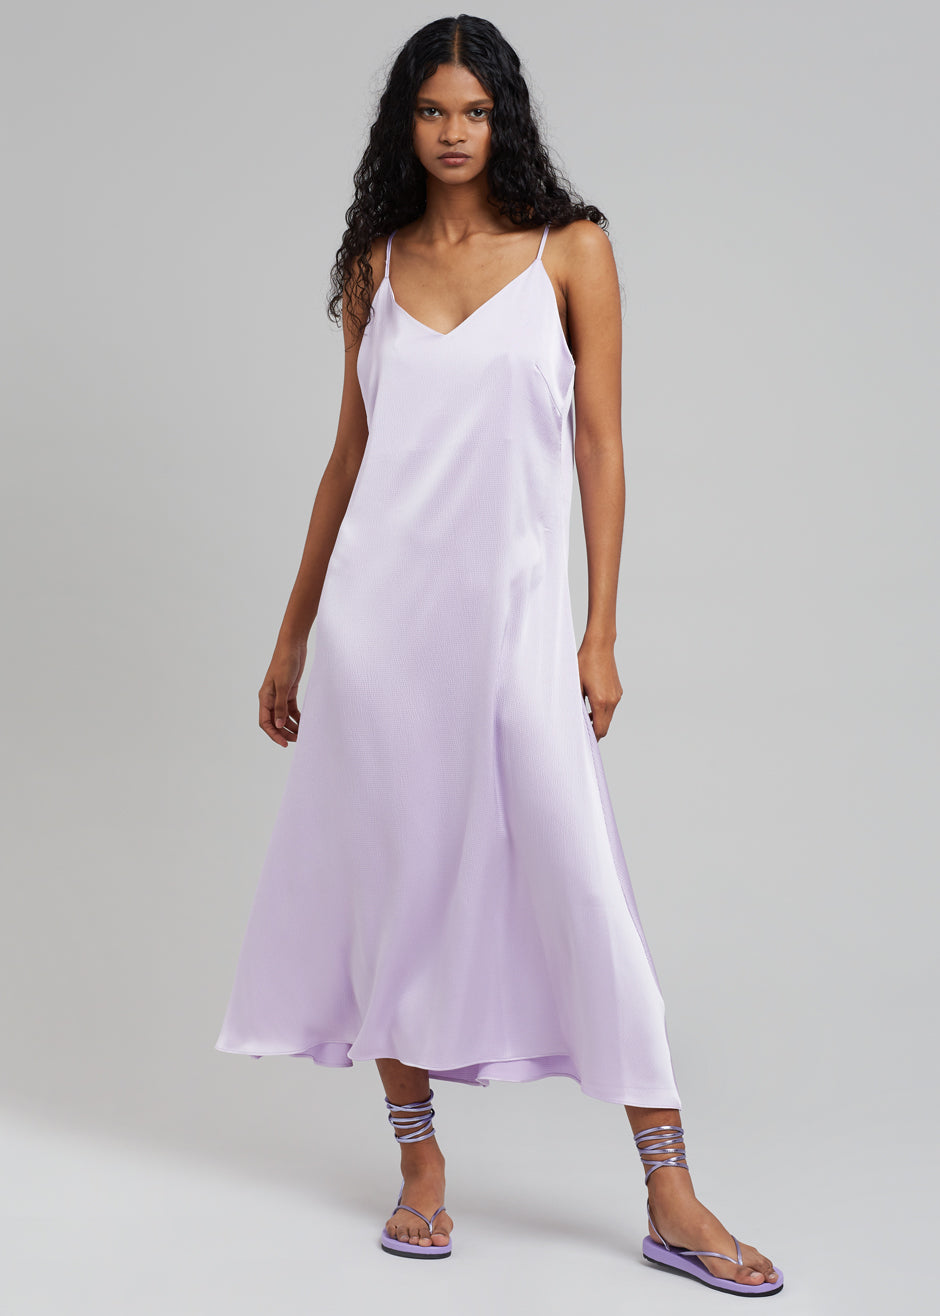 Cordelia Satin Dress - Lilac - 3